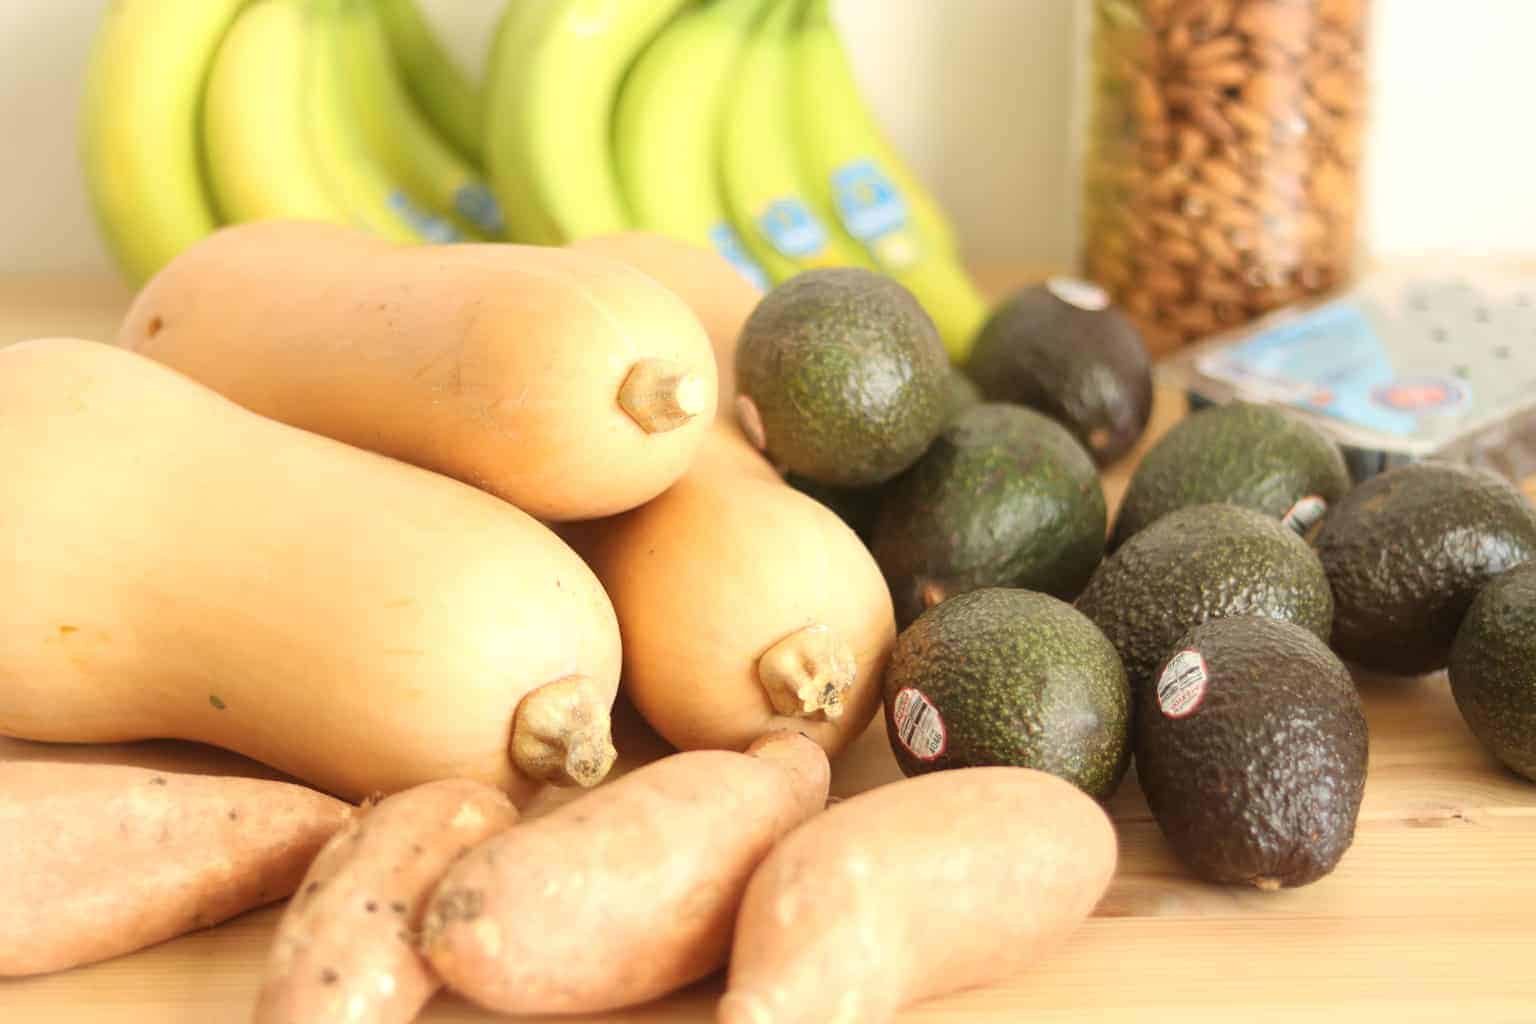 Squash, sweet potatoes, avocado, and bananas on wooden table.